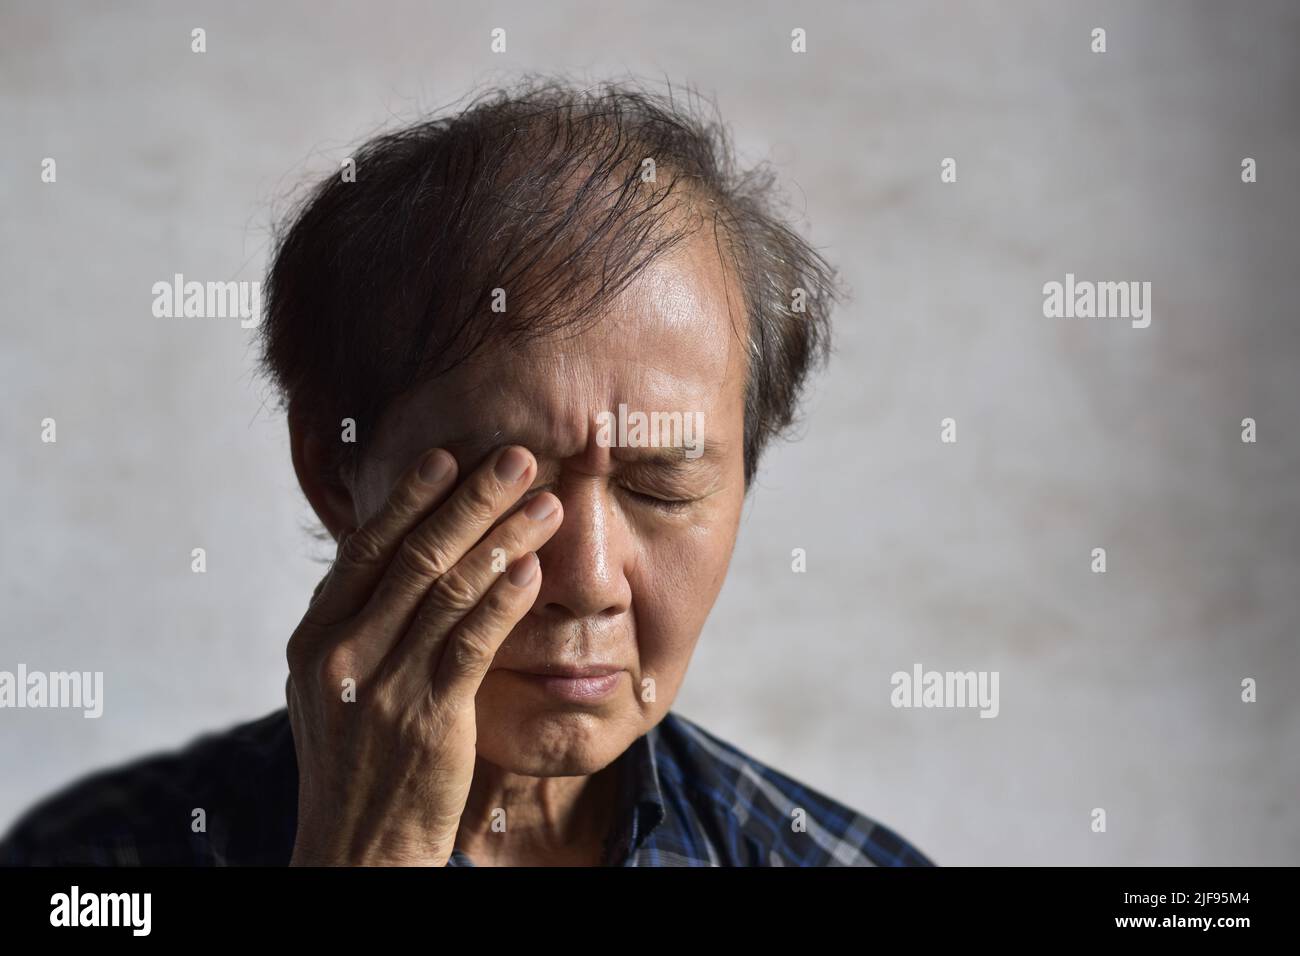 Asian elder man rubbing his eye. Concept of eye strain or itchy eyelid. Stock Photo